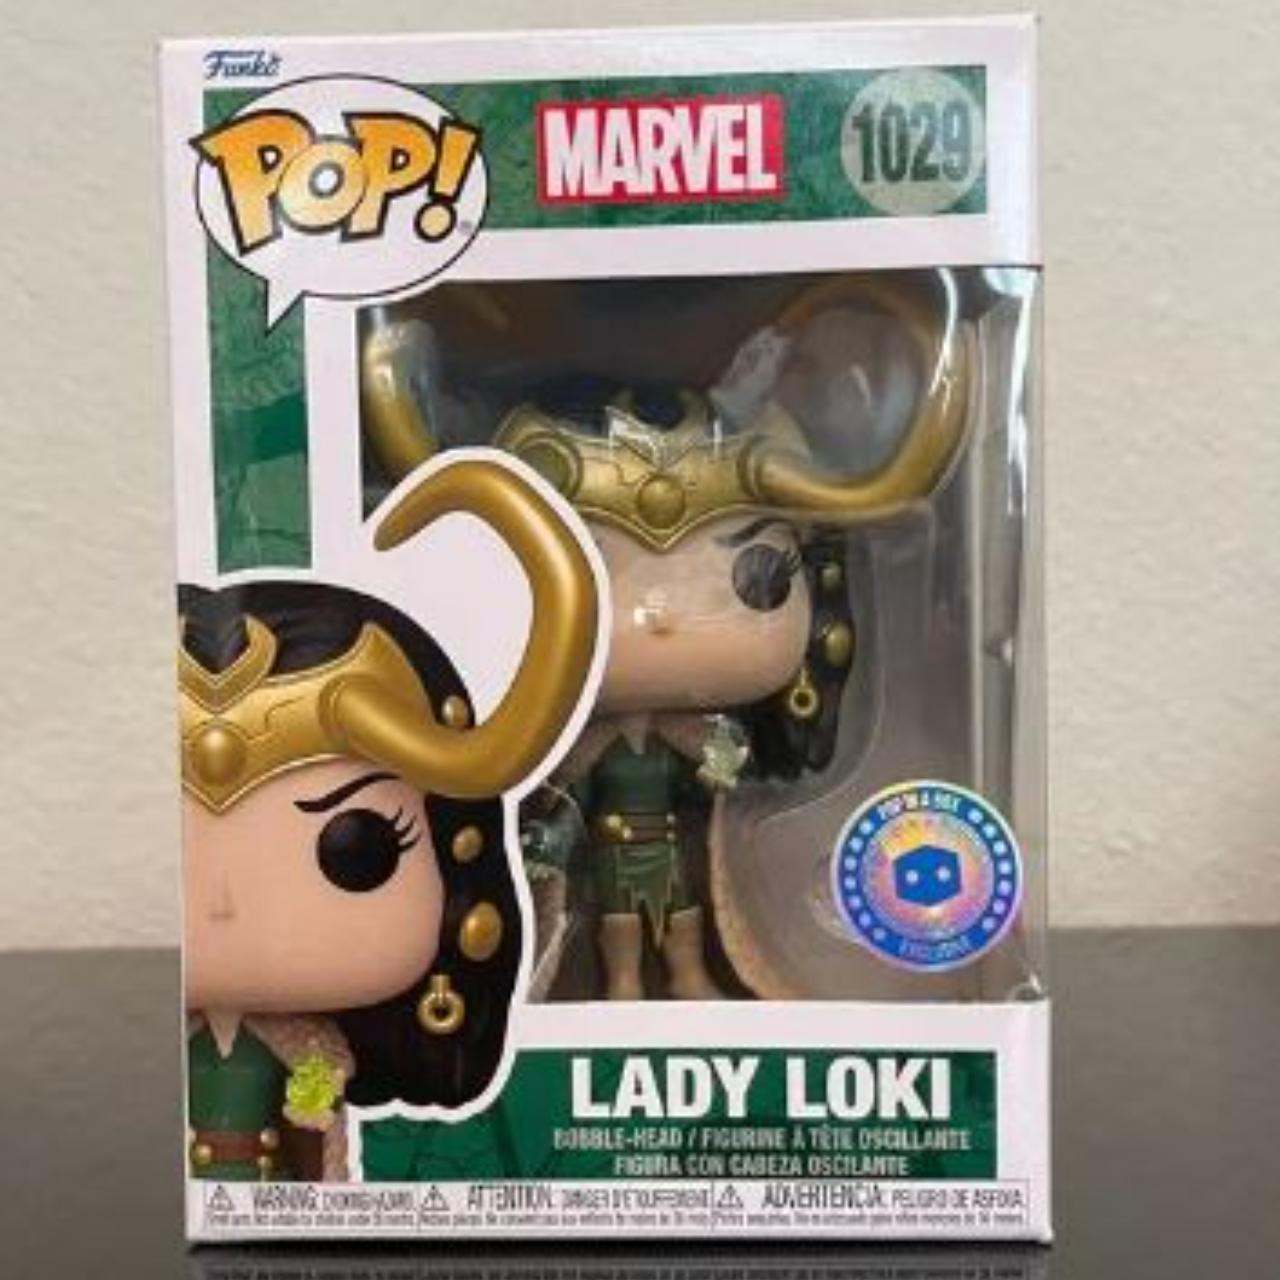 POP! Vinyl 1029: Marvel Lady Loki